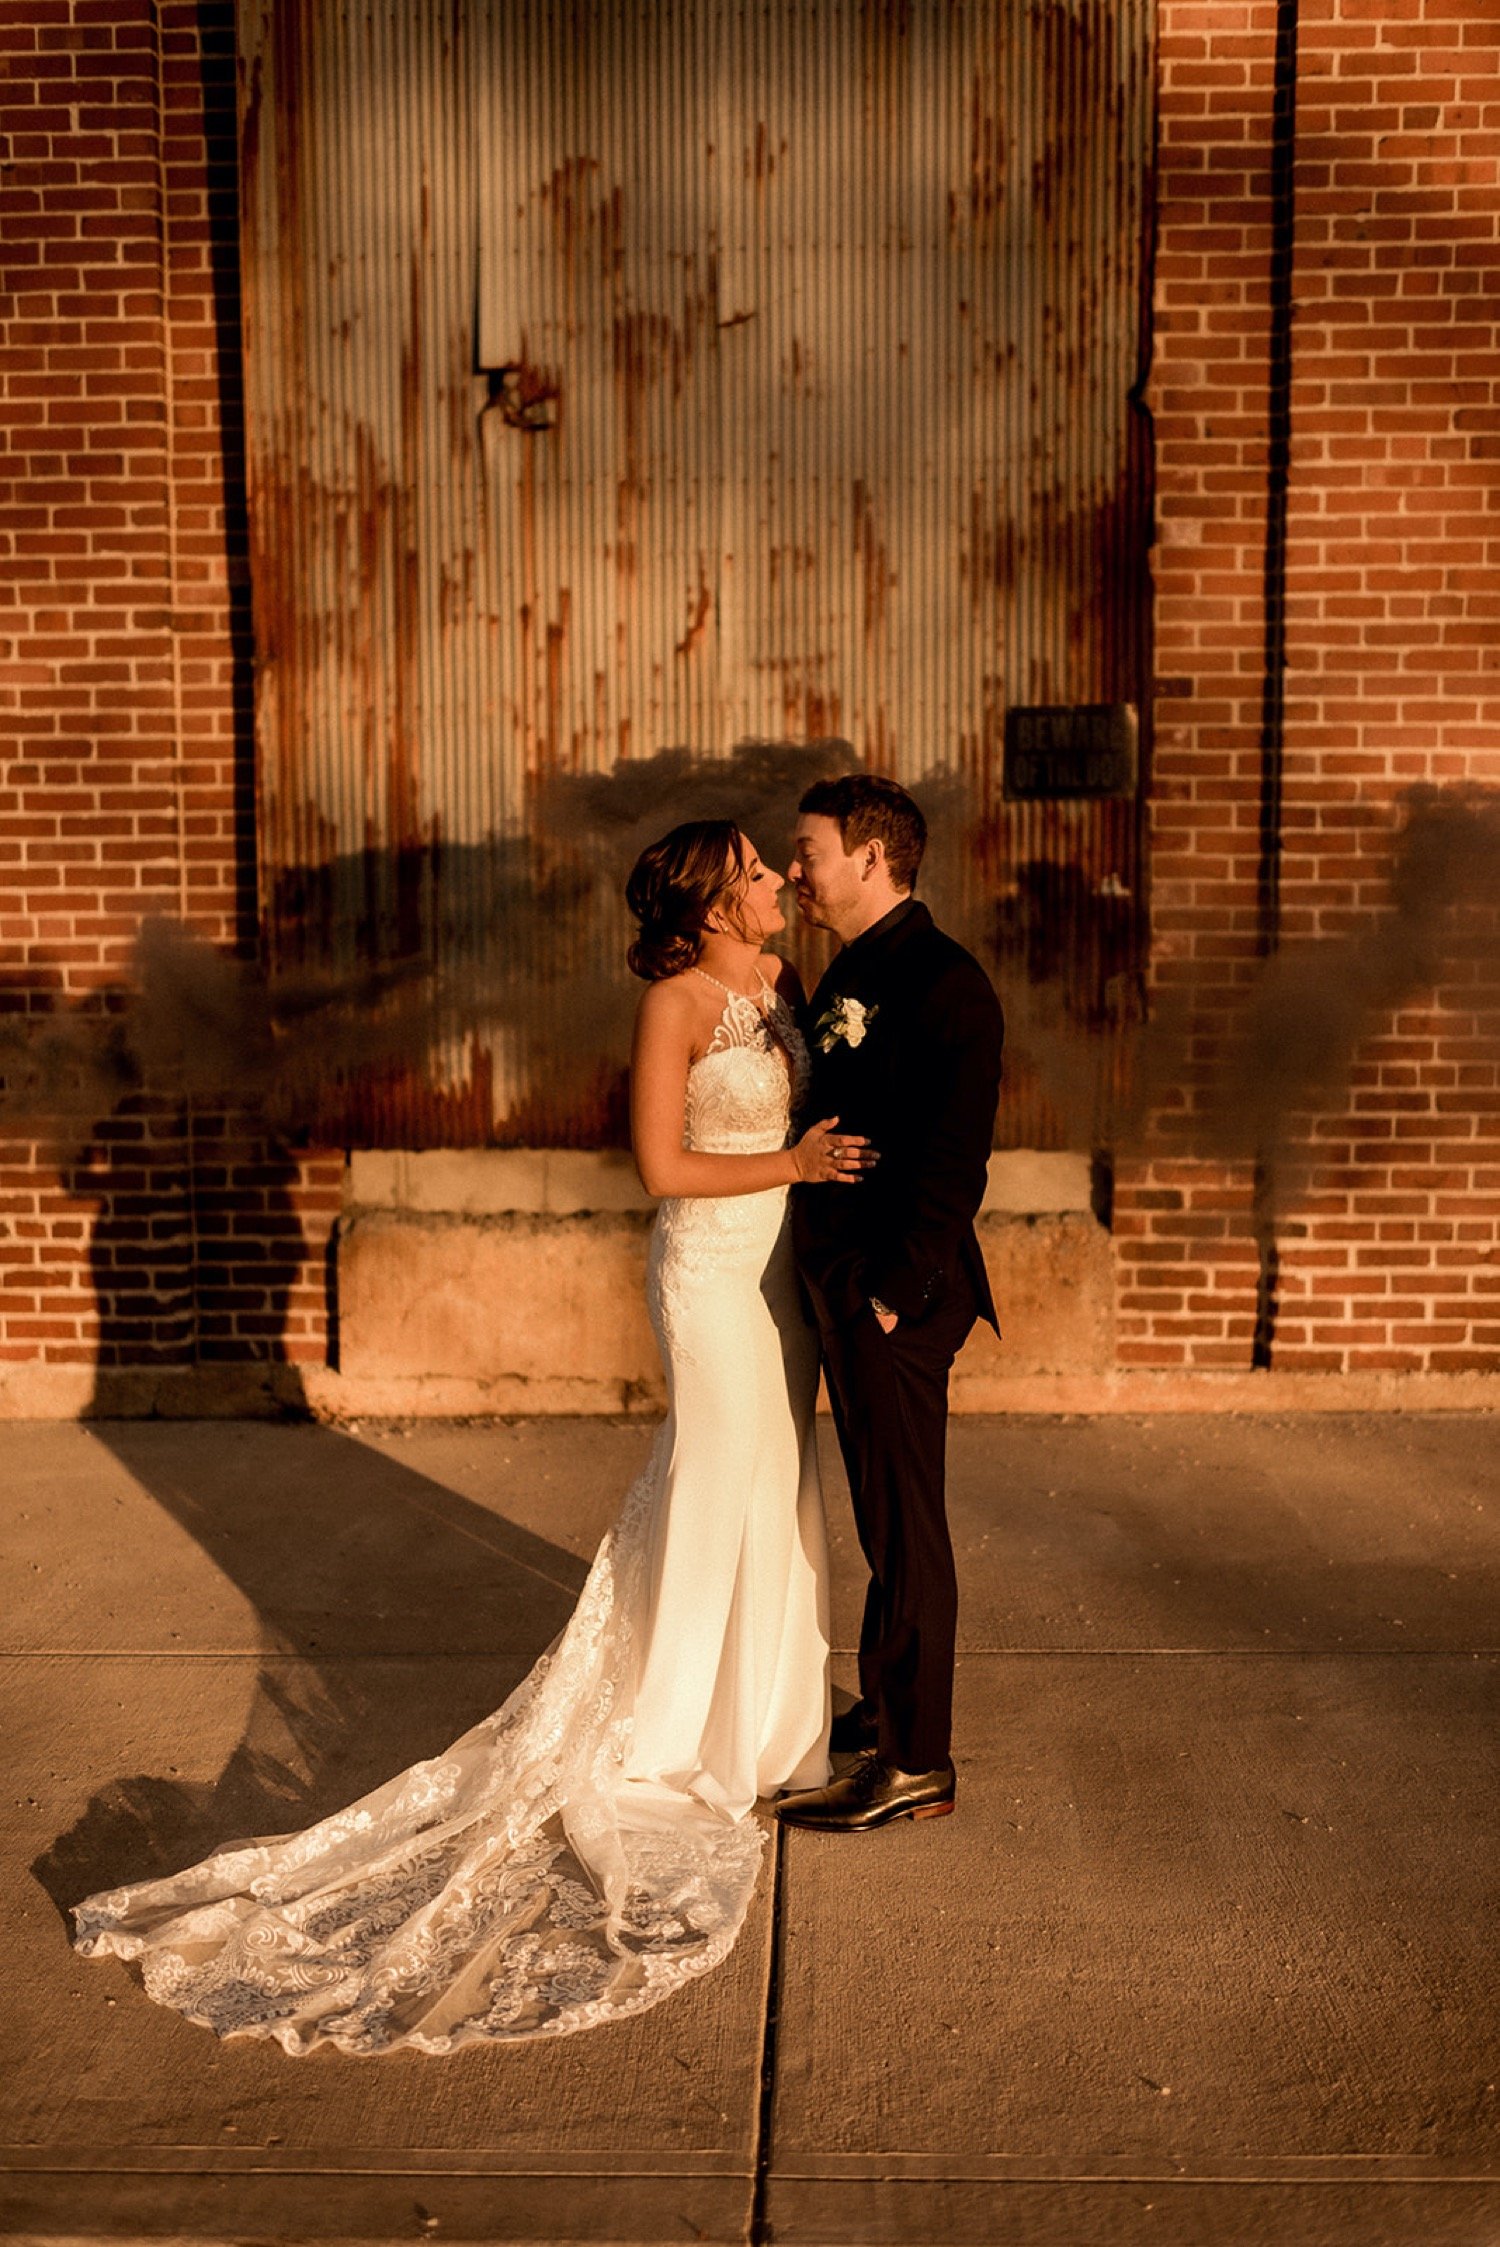 Smoke-bomb-wedding-photos-Indianapolis-tinker-house.jpg.jpg